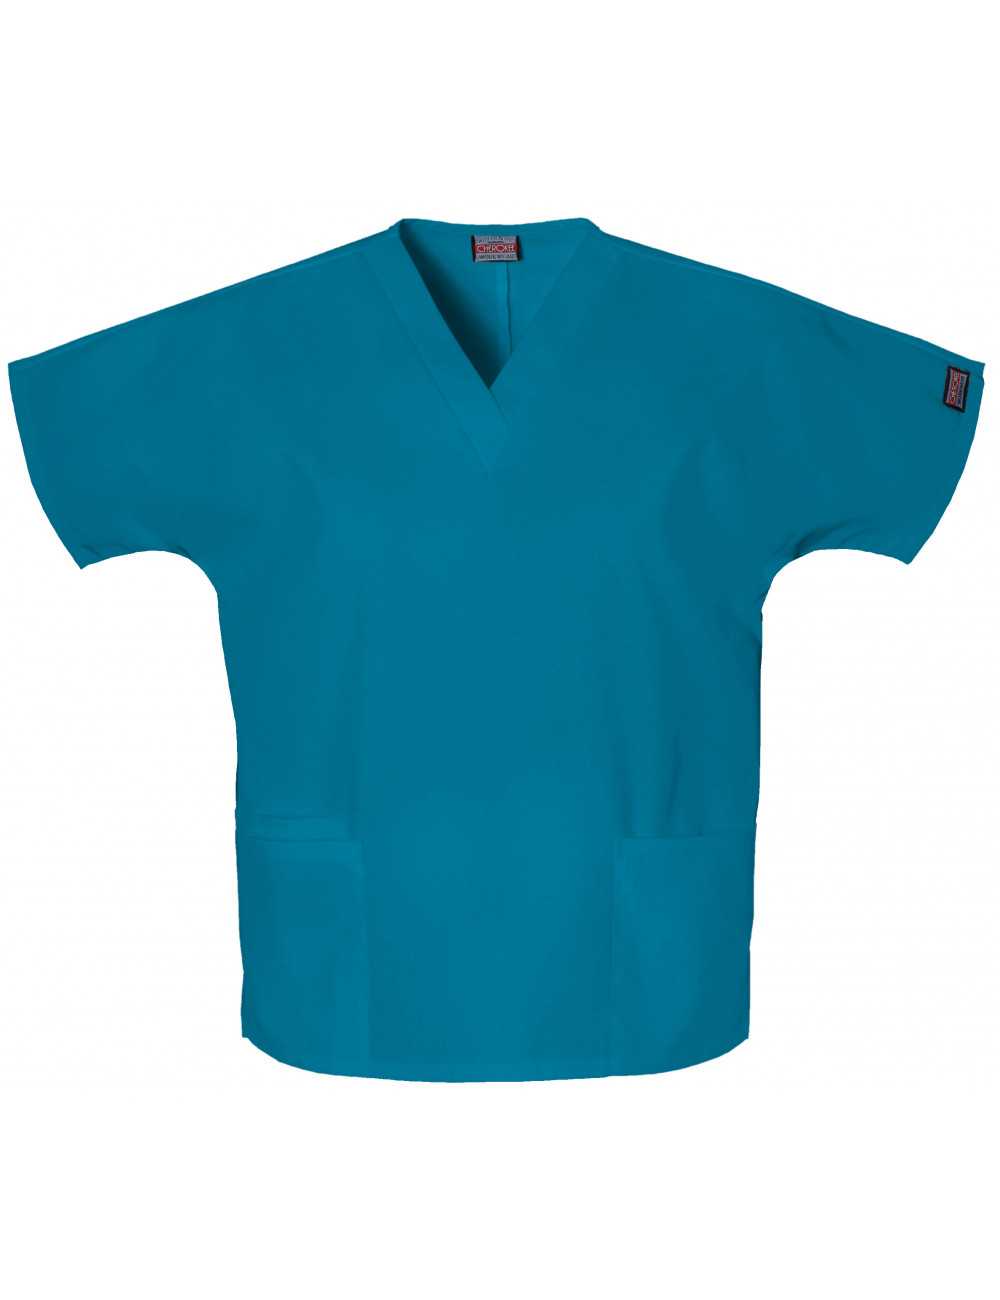 Blouse médicale Unisexe, 2 poches, Cherokee Workwear Originals (4700)